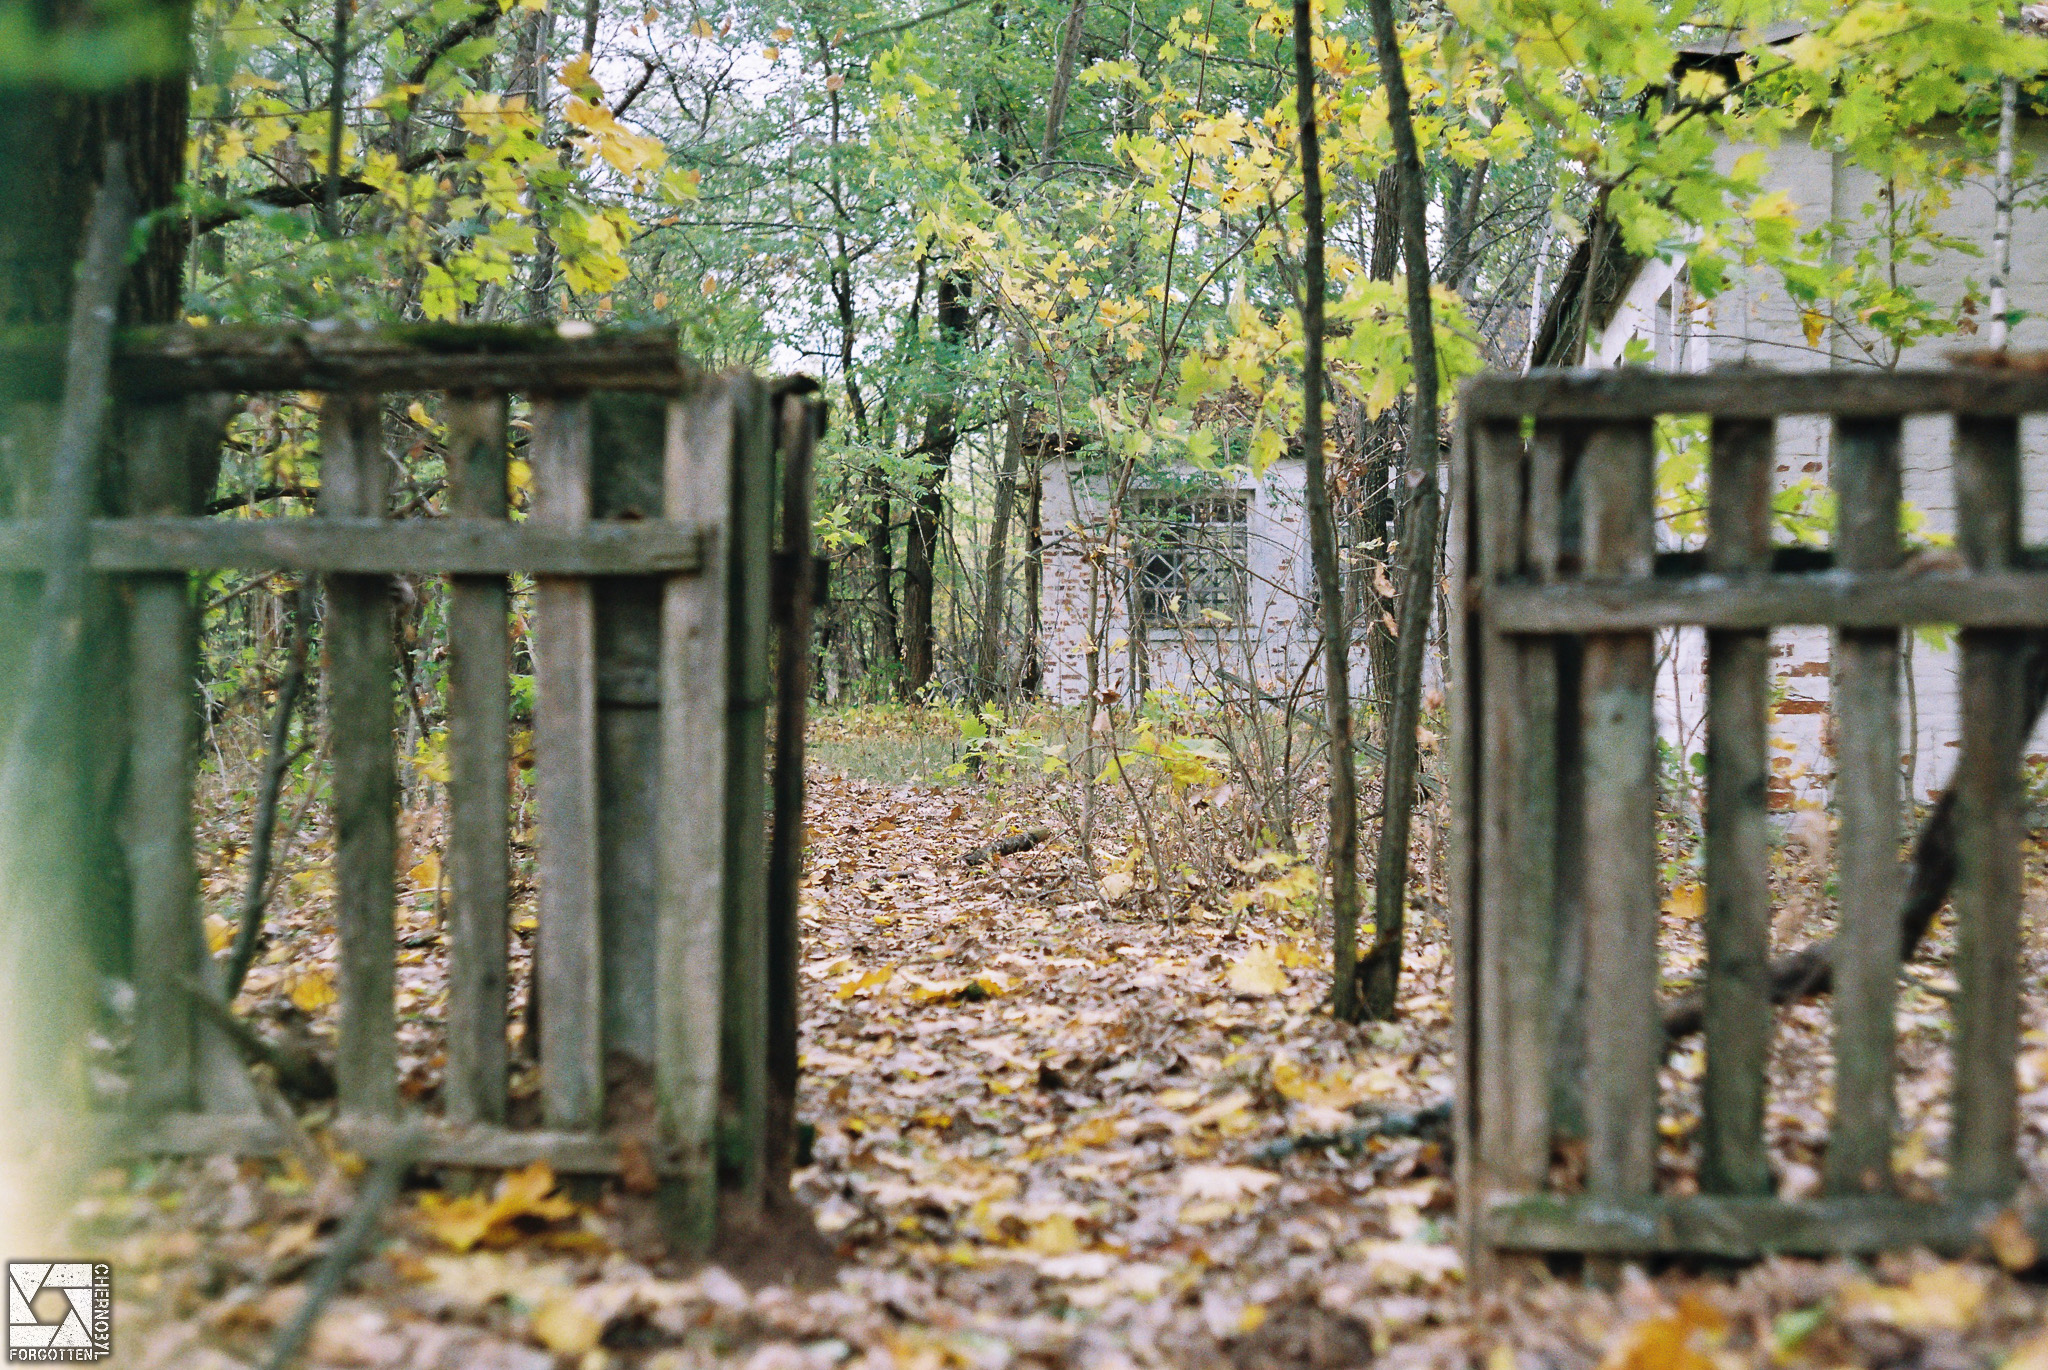 Chernobyl Zone on a 35mm film captured with Kiev 4 camera